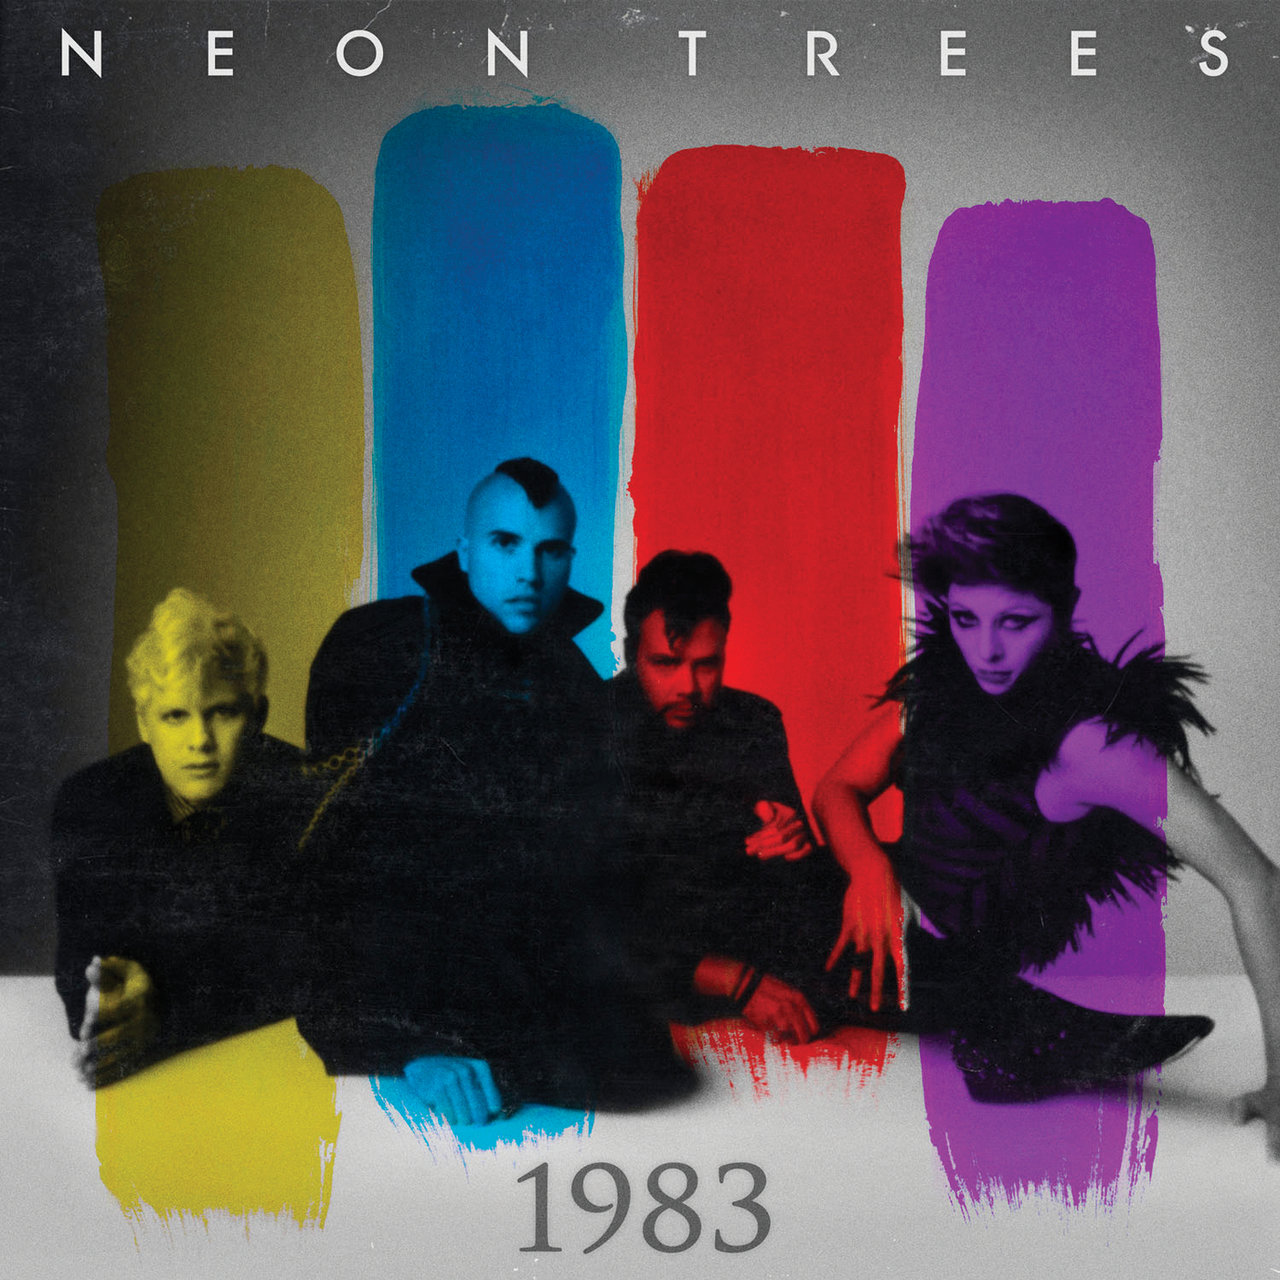 Neon Trees — 1983 cover artwork